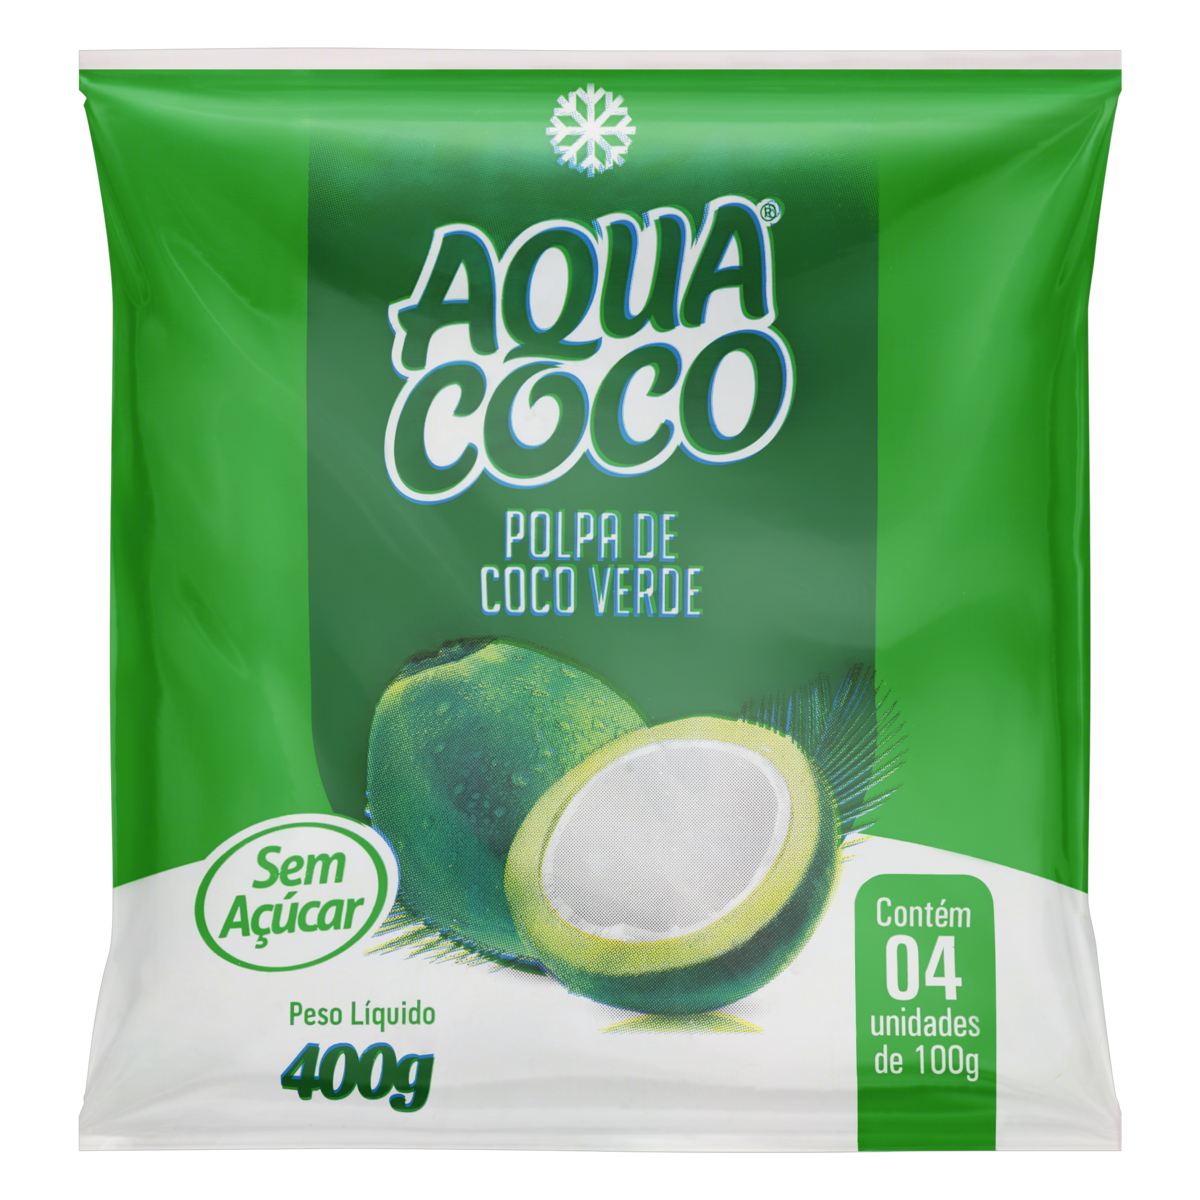 7898681940028 - POLPA DE FRUTA COCO VERDE AQUA COCO PACOTE 400G 4 UNIDADES